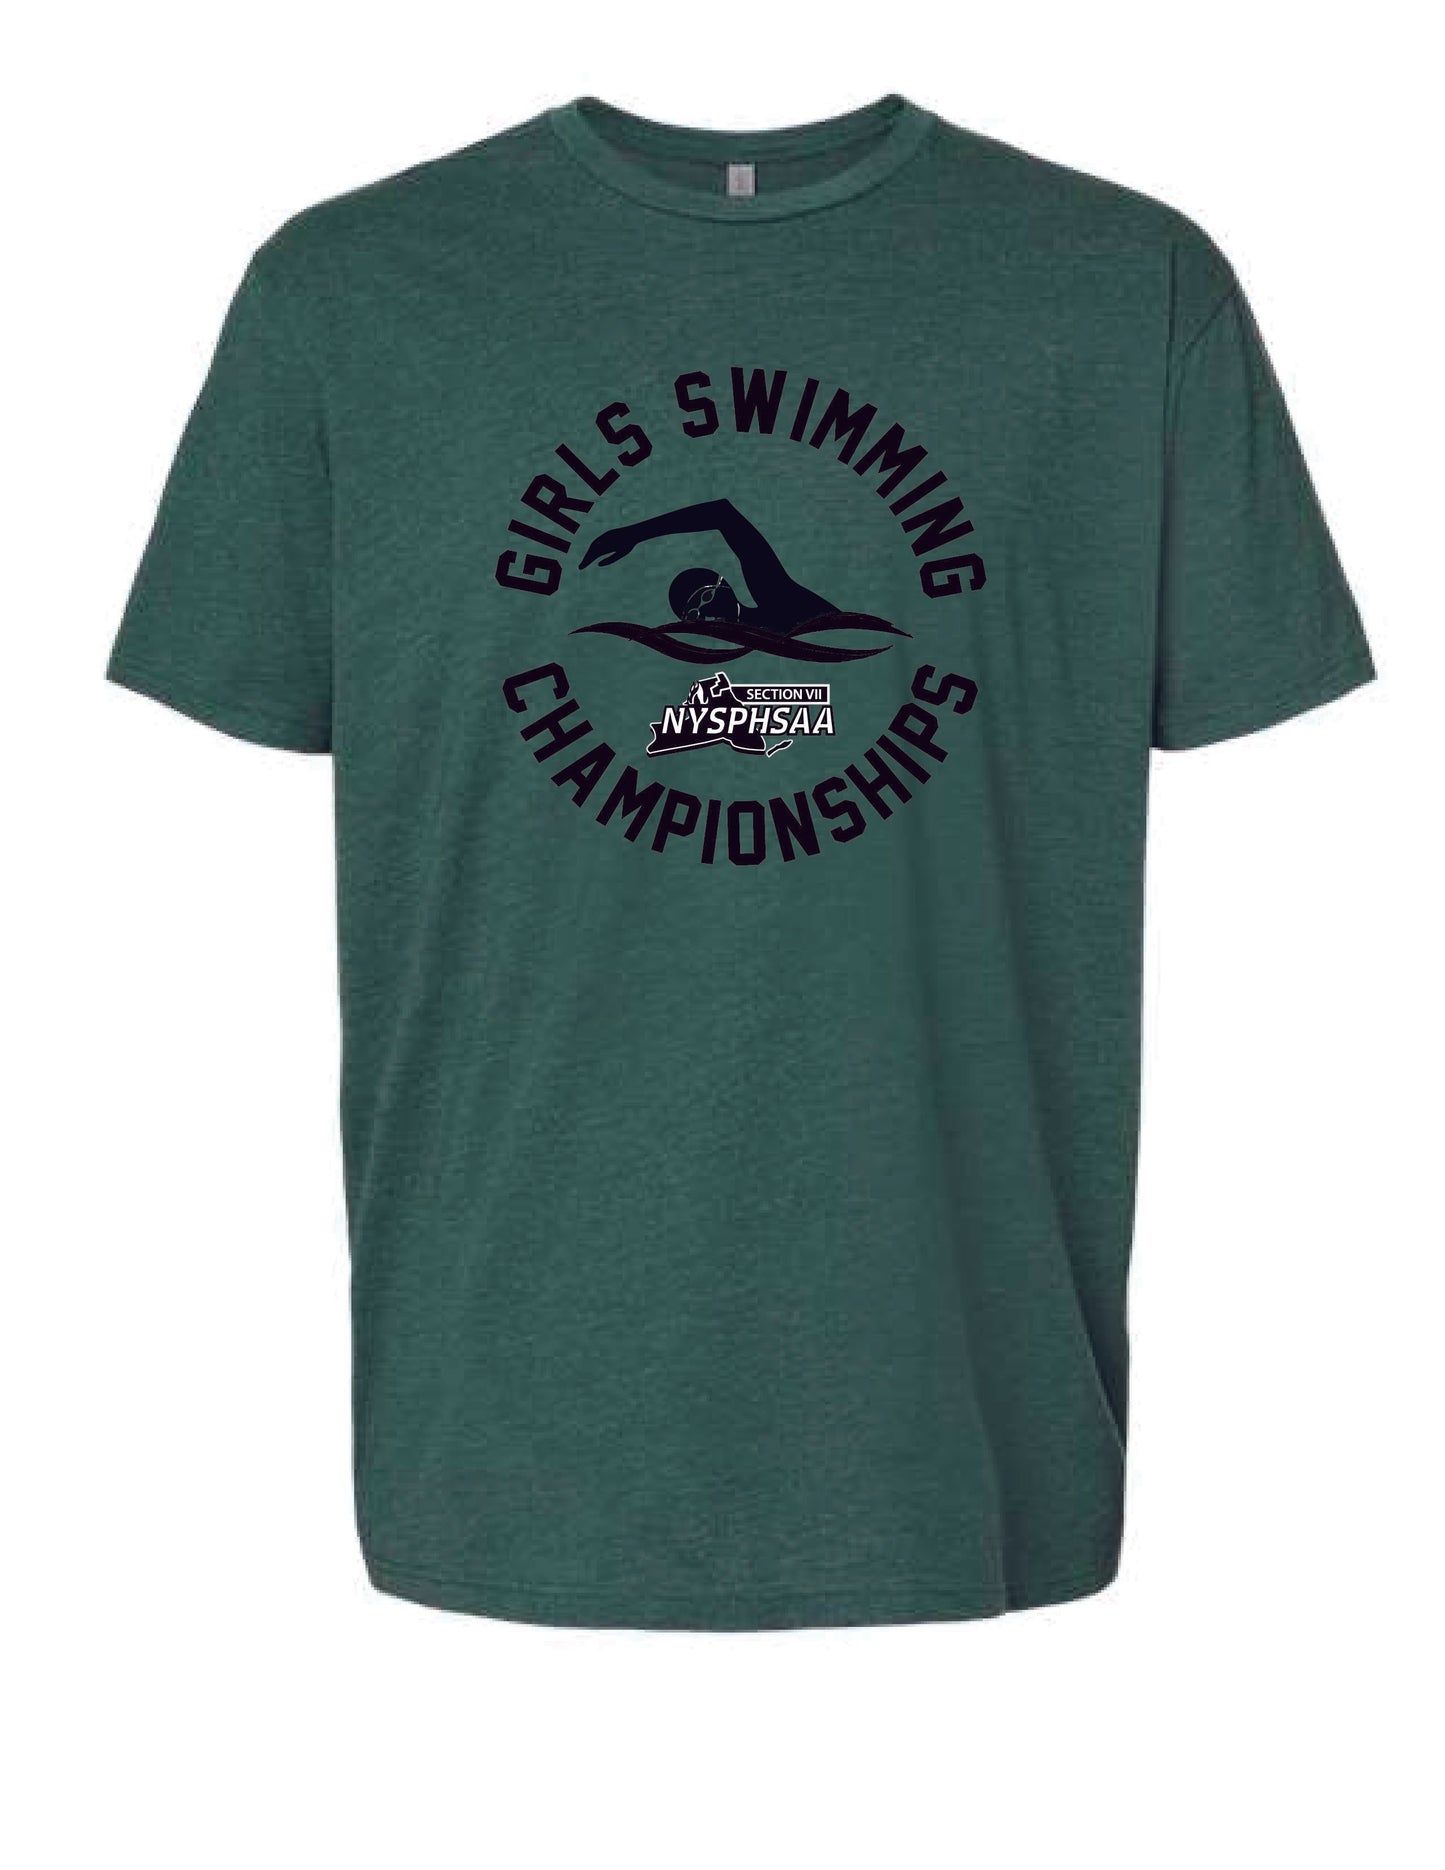 Fall 2022 Girls Swimming Shirt